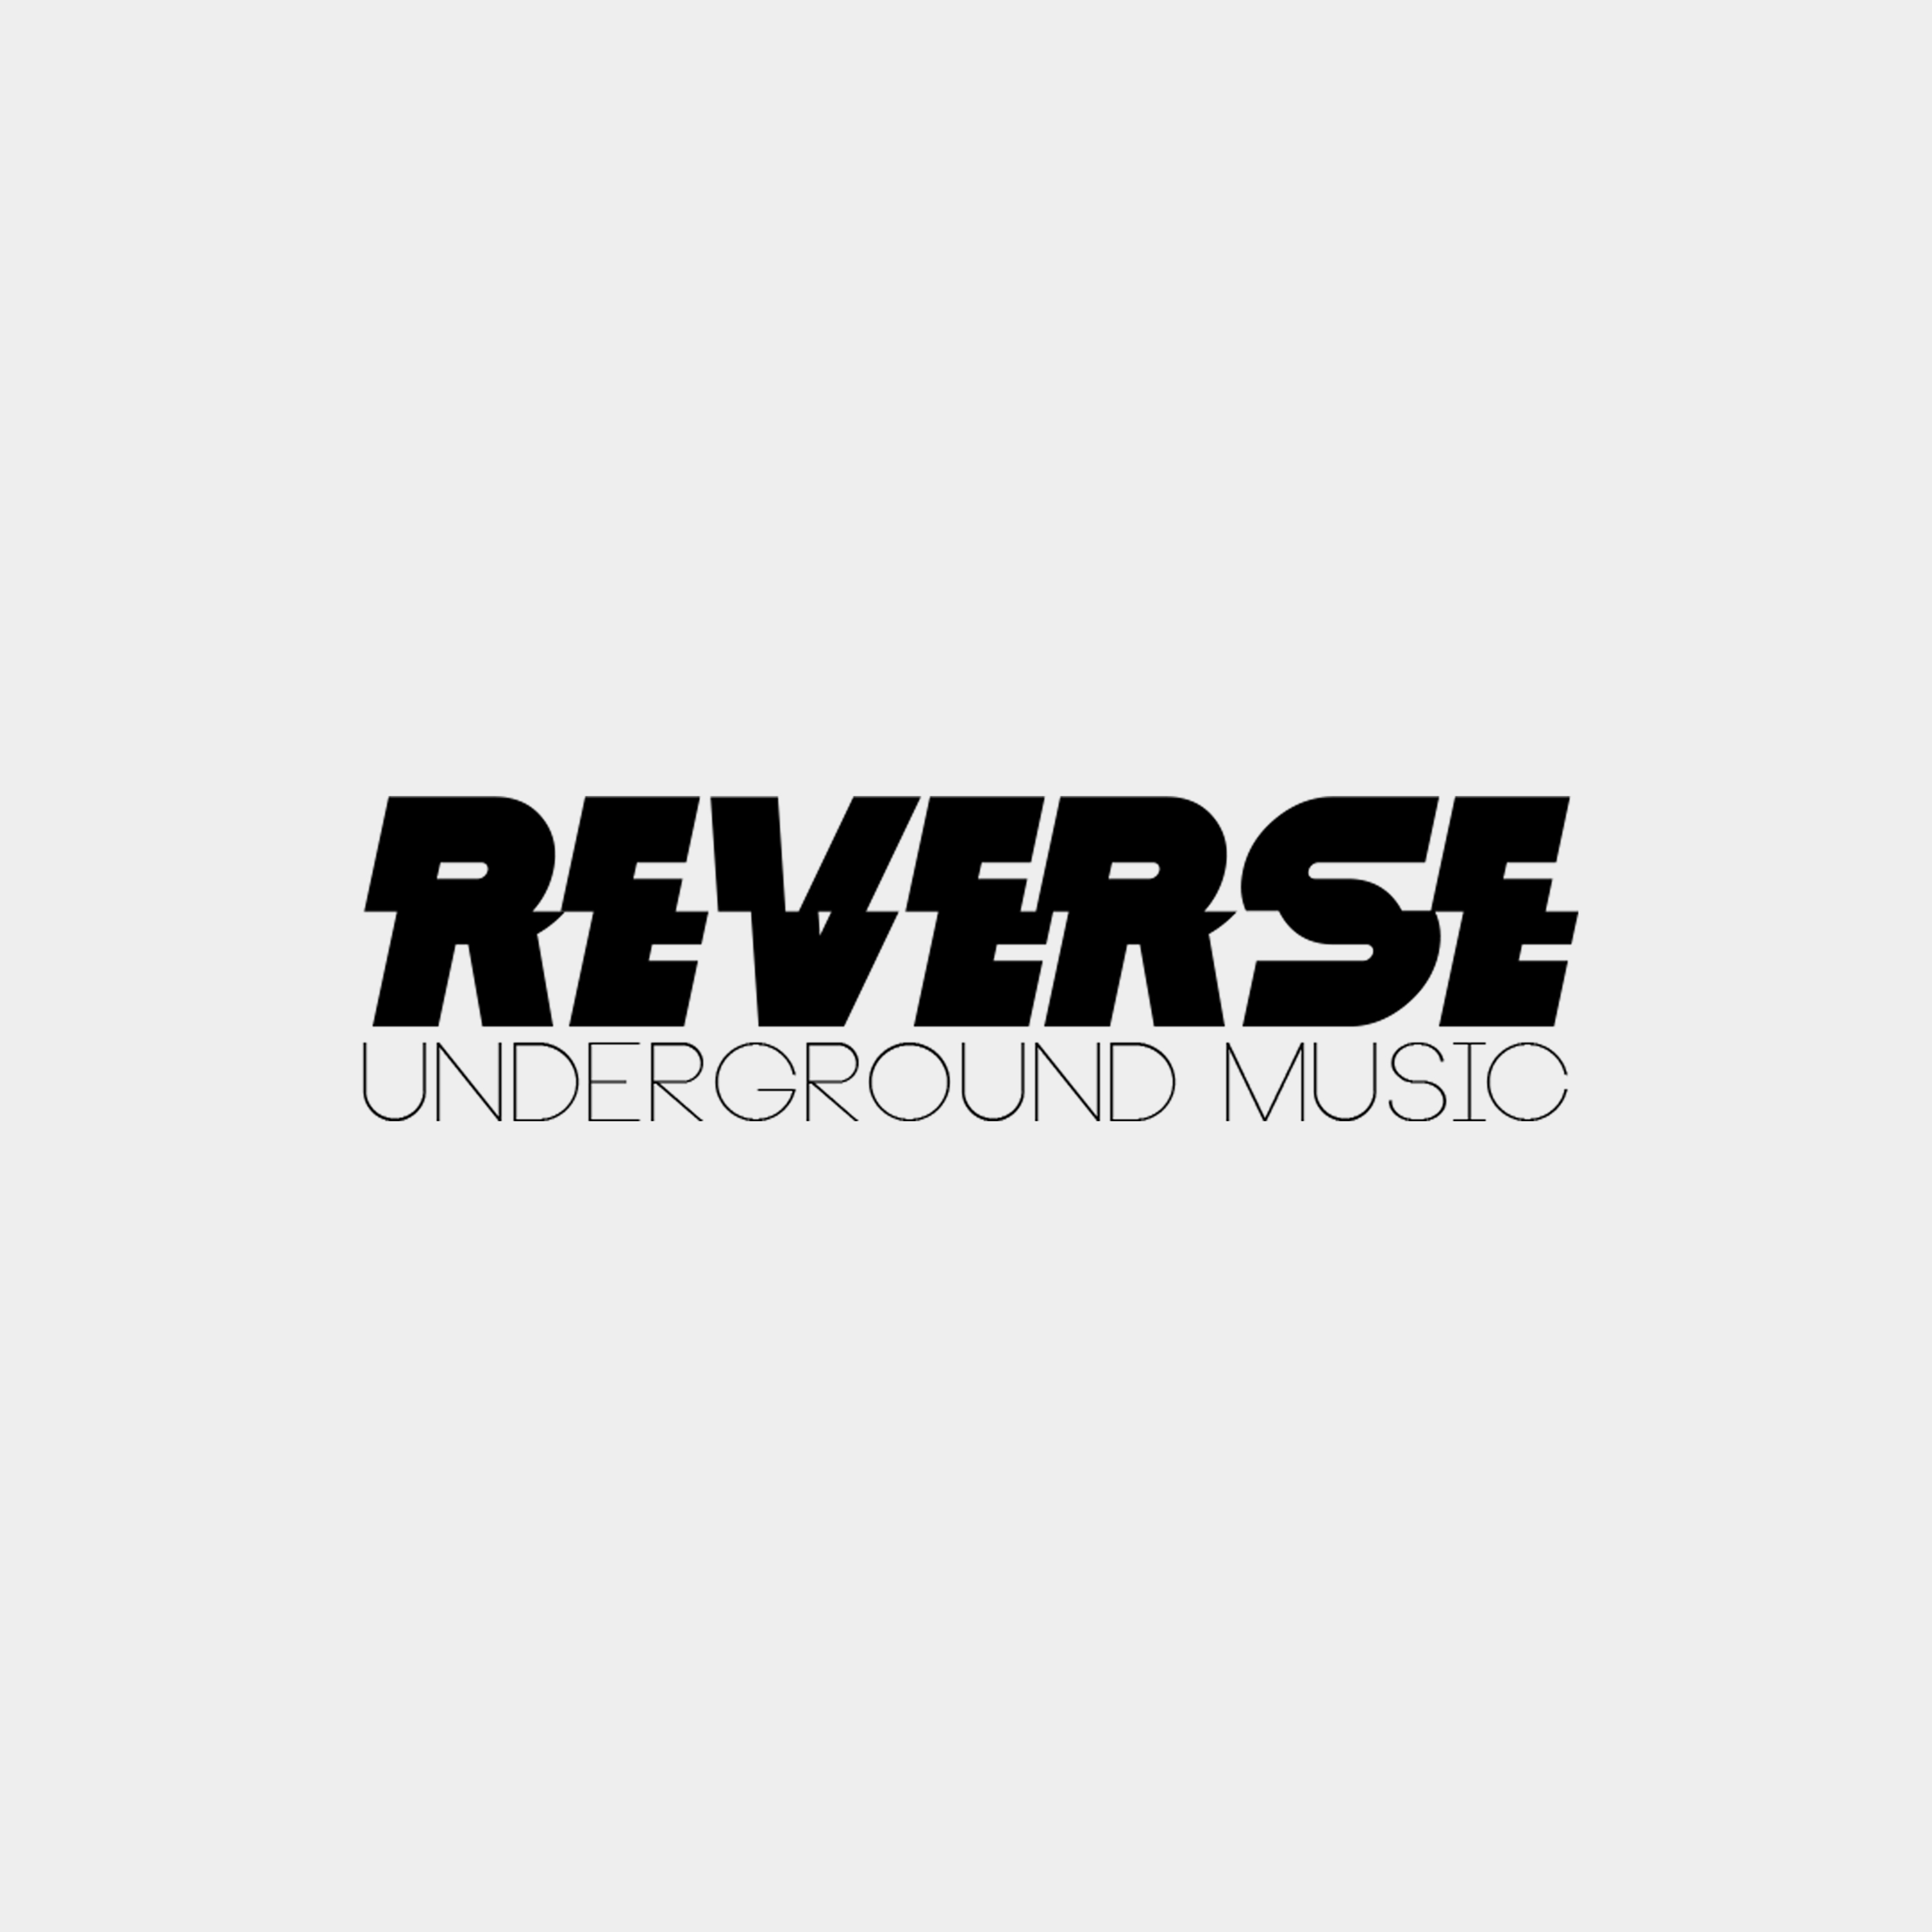 Reverse Music Label